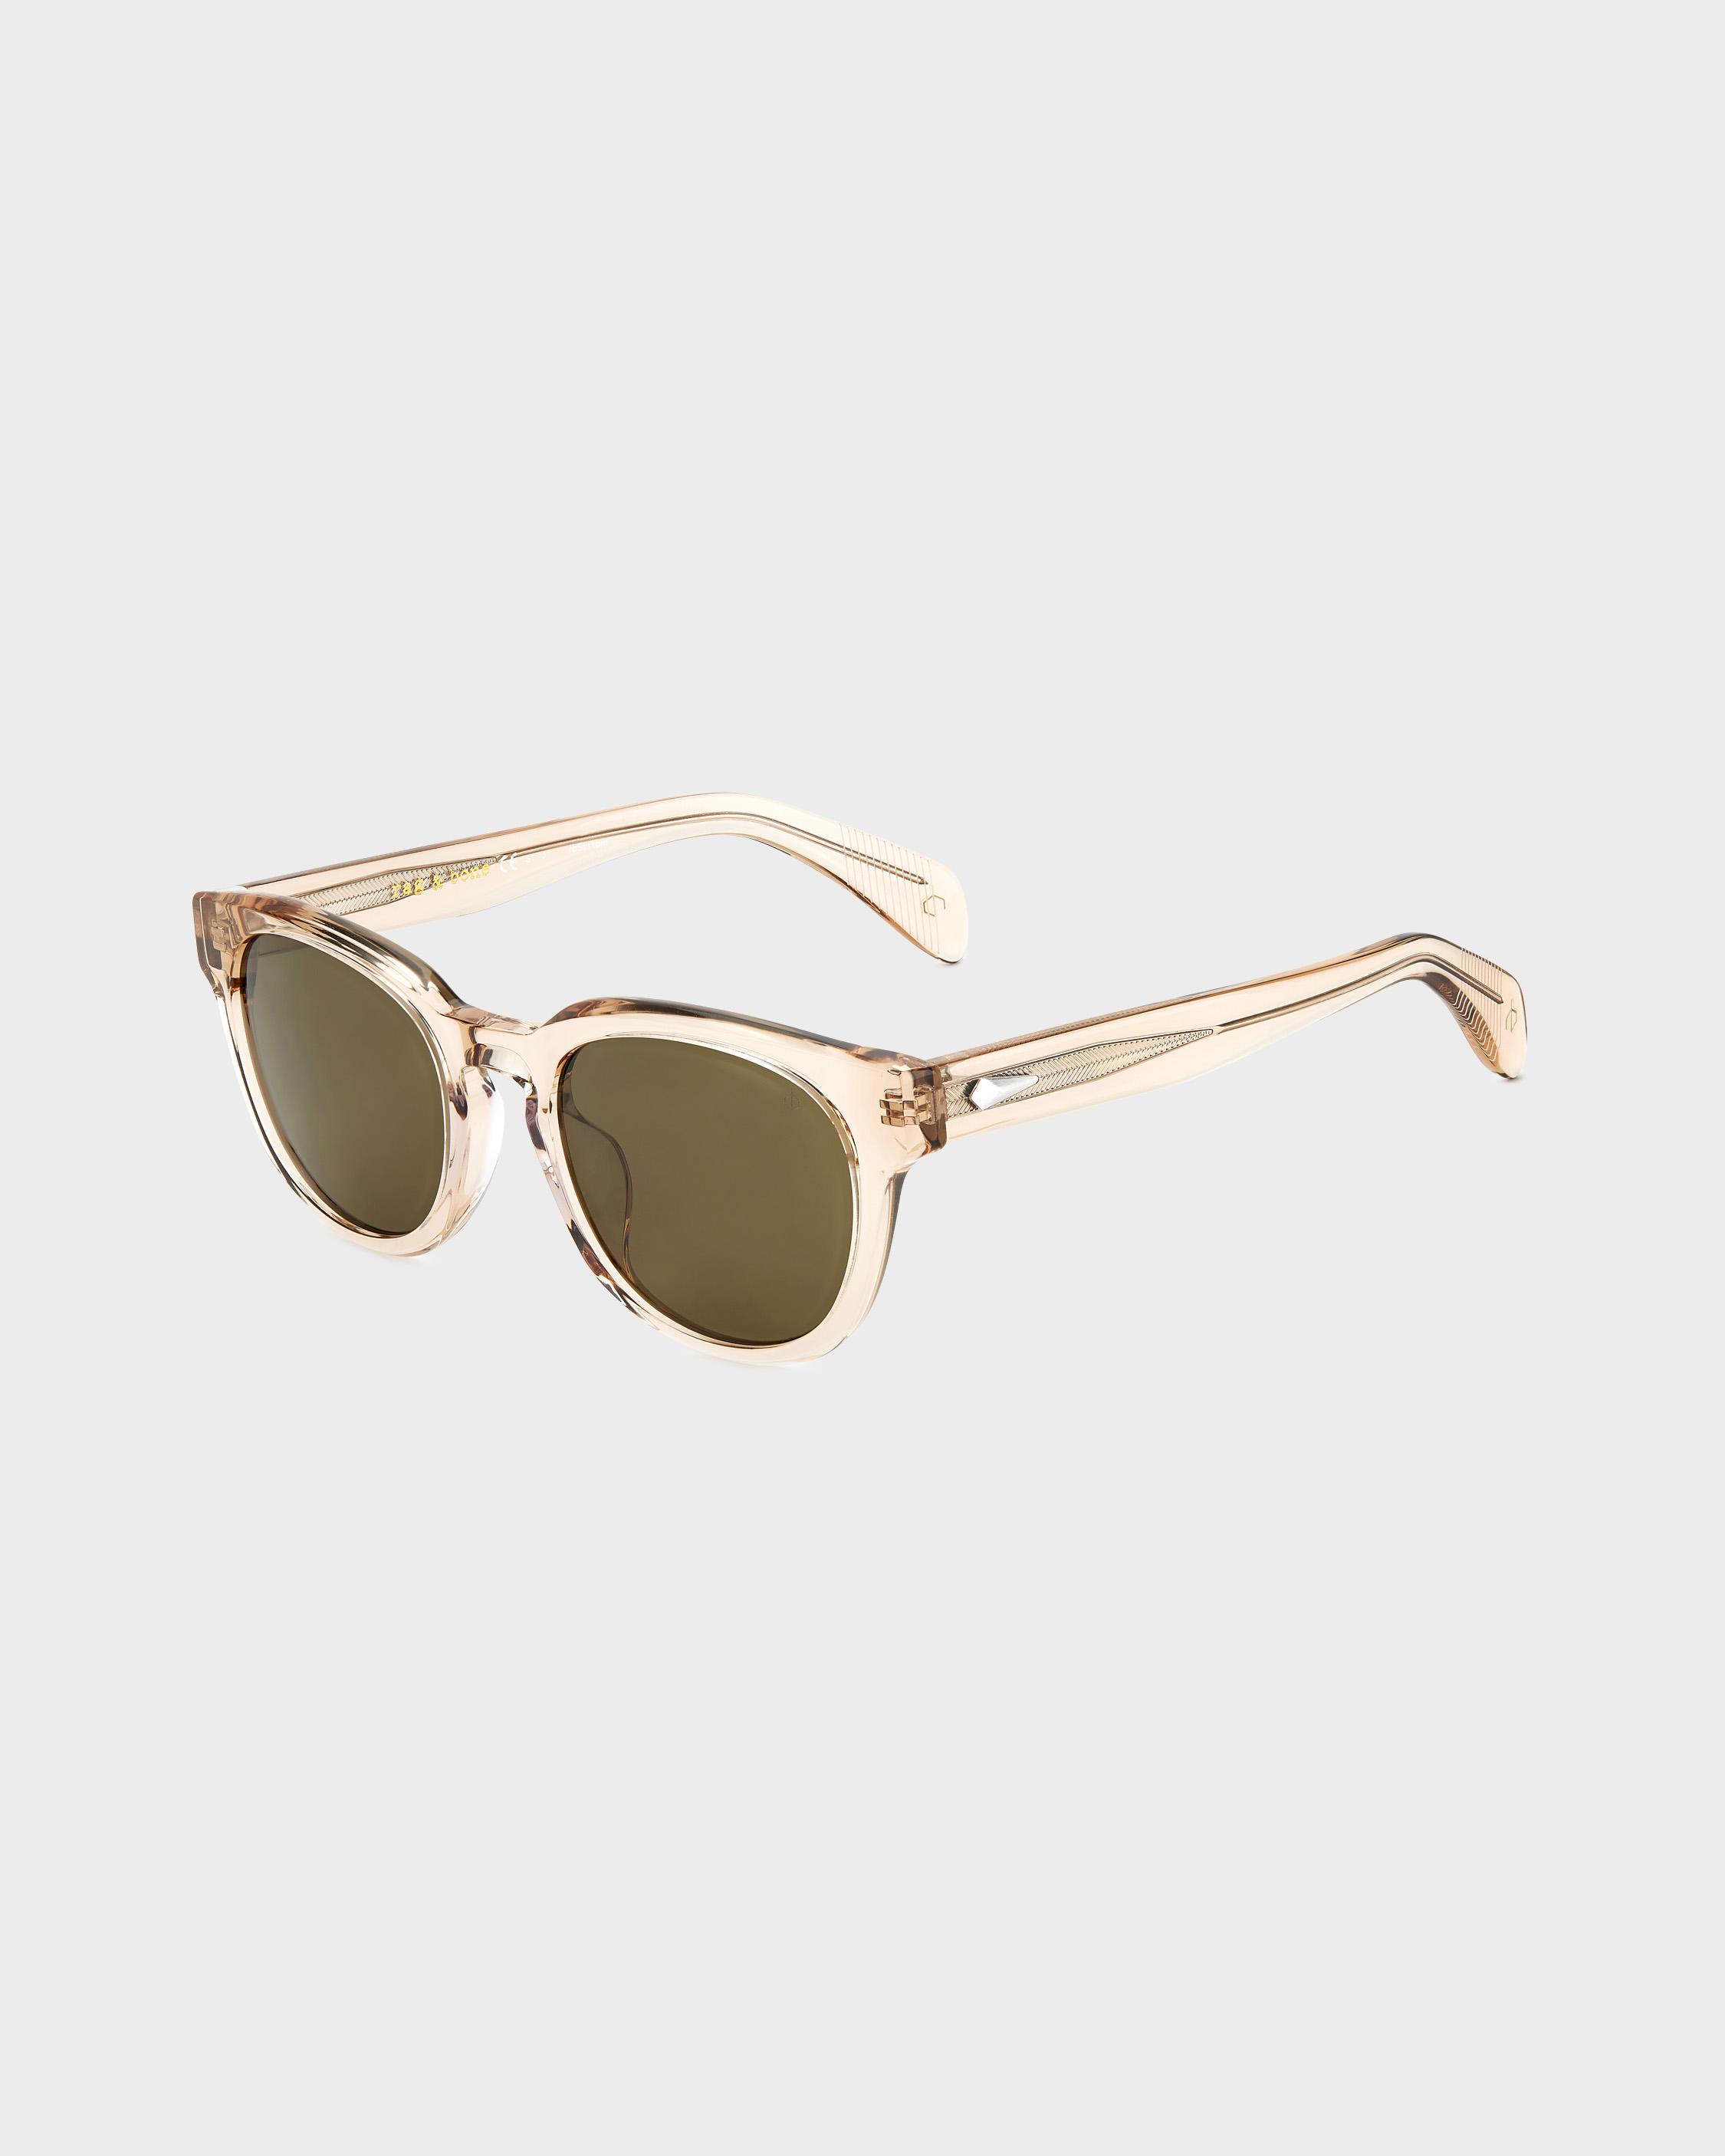 Sunglasses in Unisex, Urban Style | rag & bone